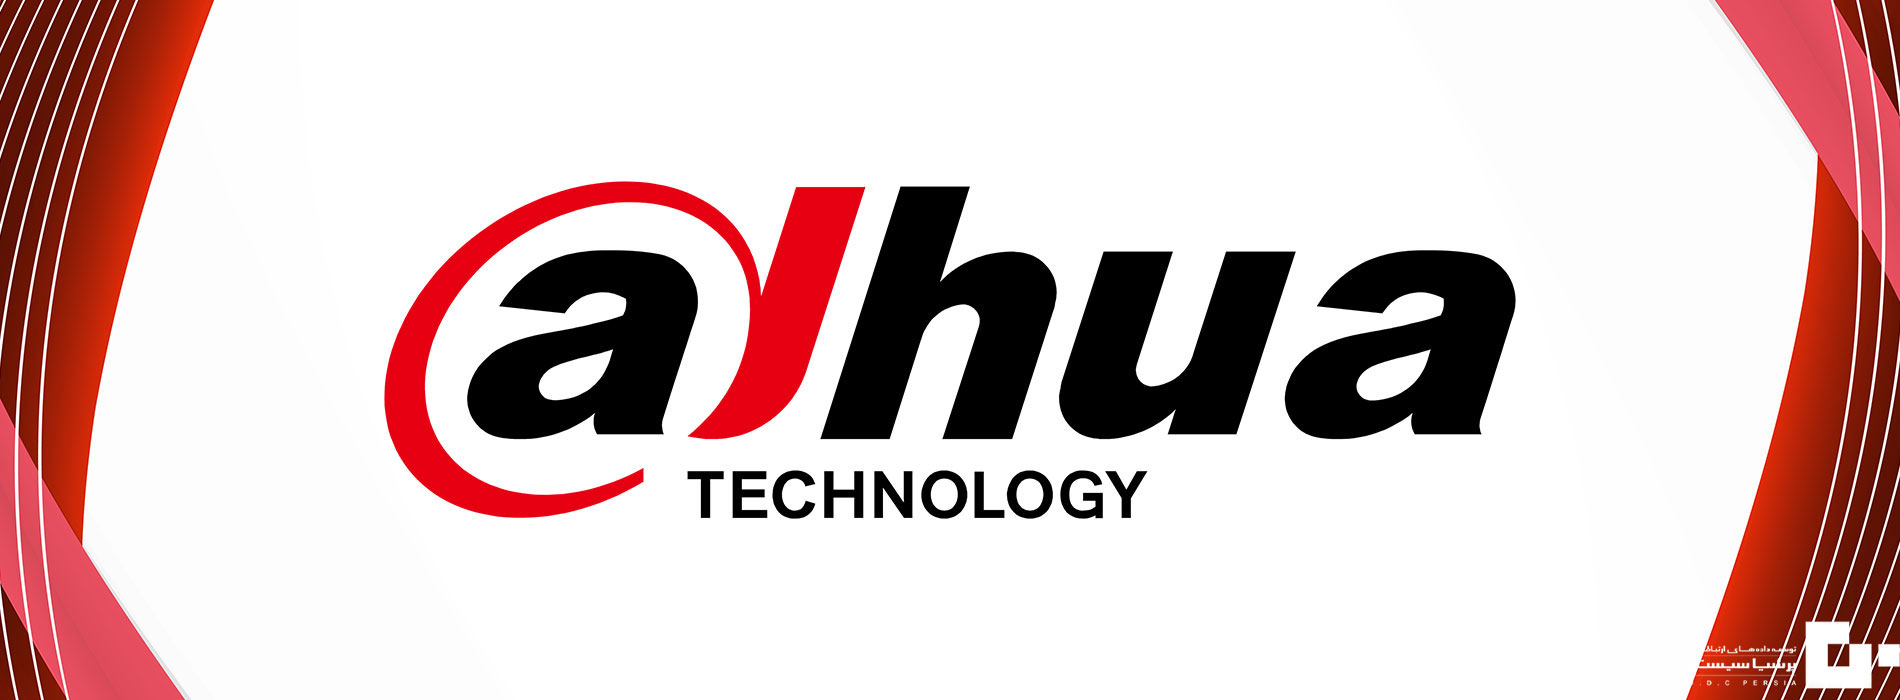 dahua company 1 - 5 برند دوربین مداربسته مطرح در جهان